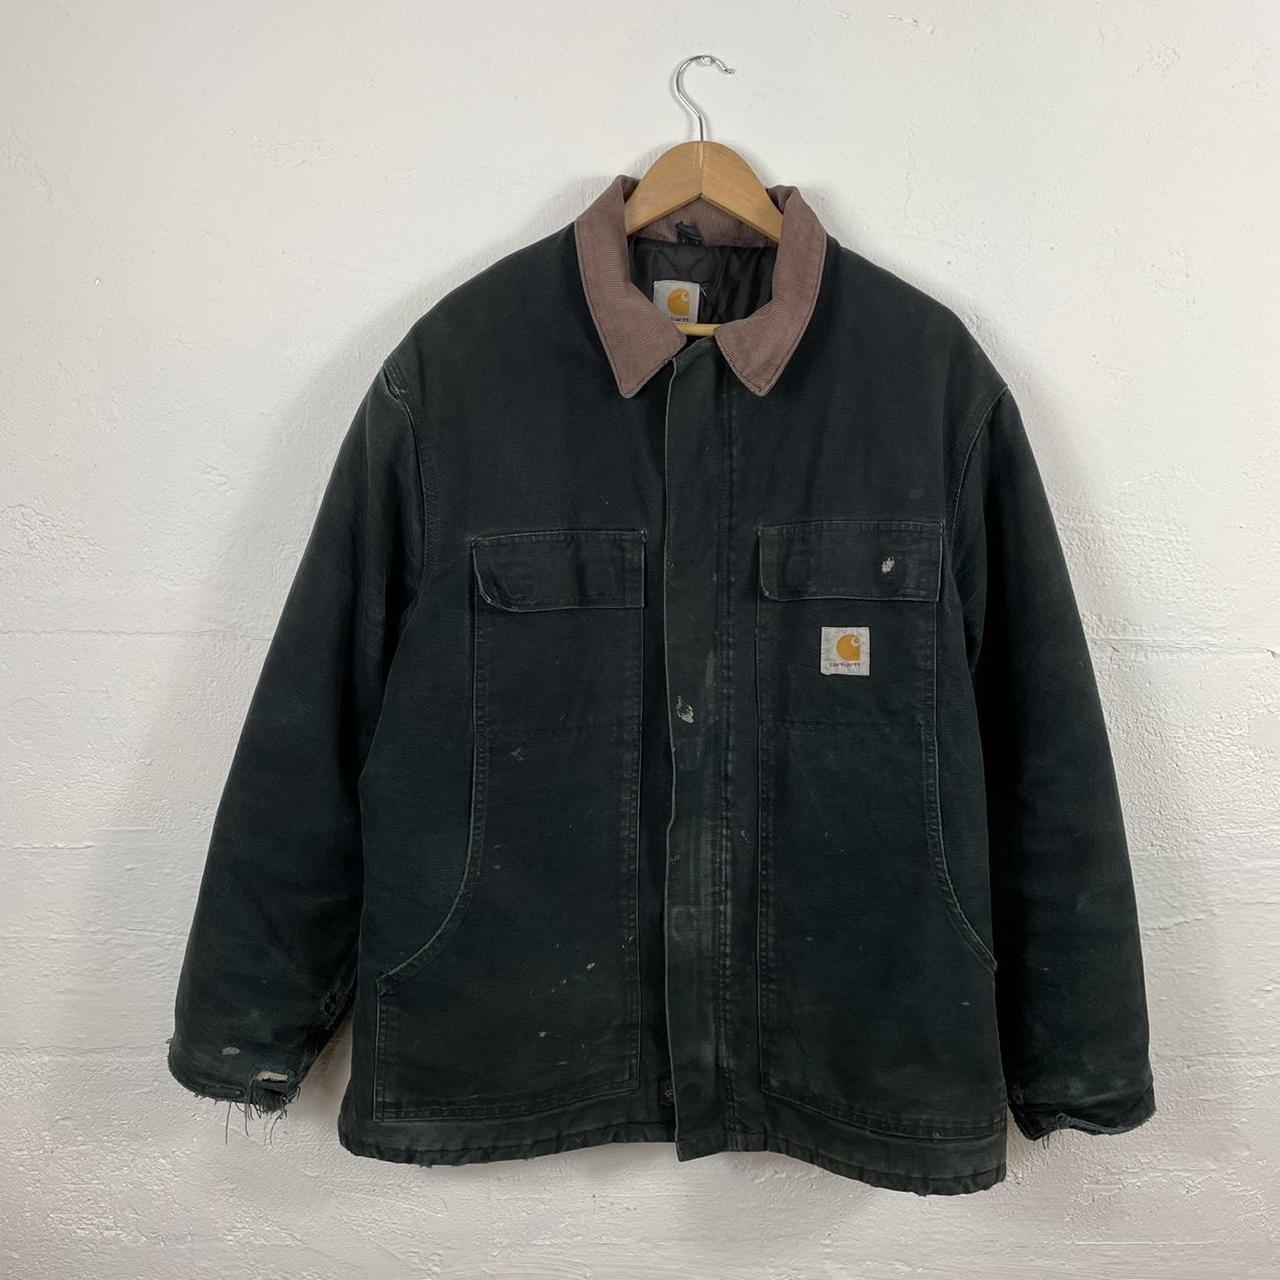 Carhartt vintage worked in Michigan chore jacket - Depop